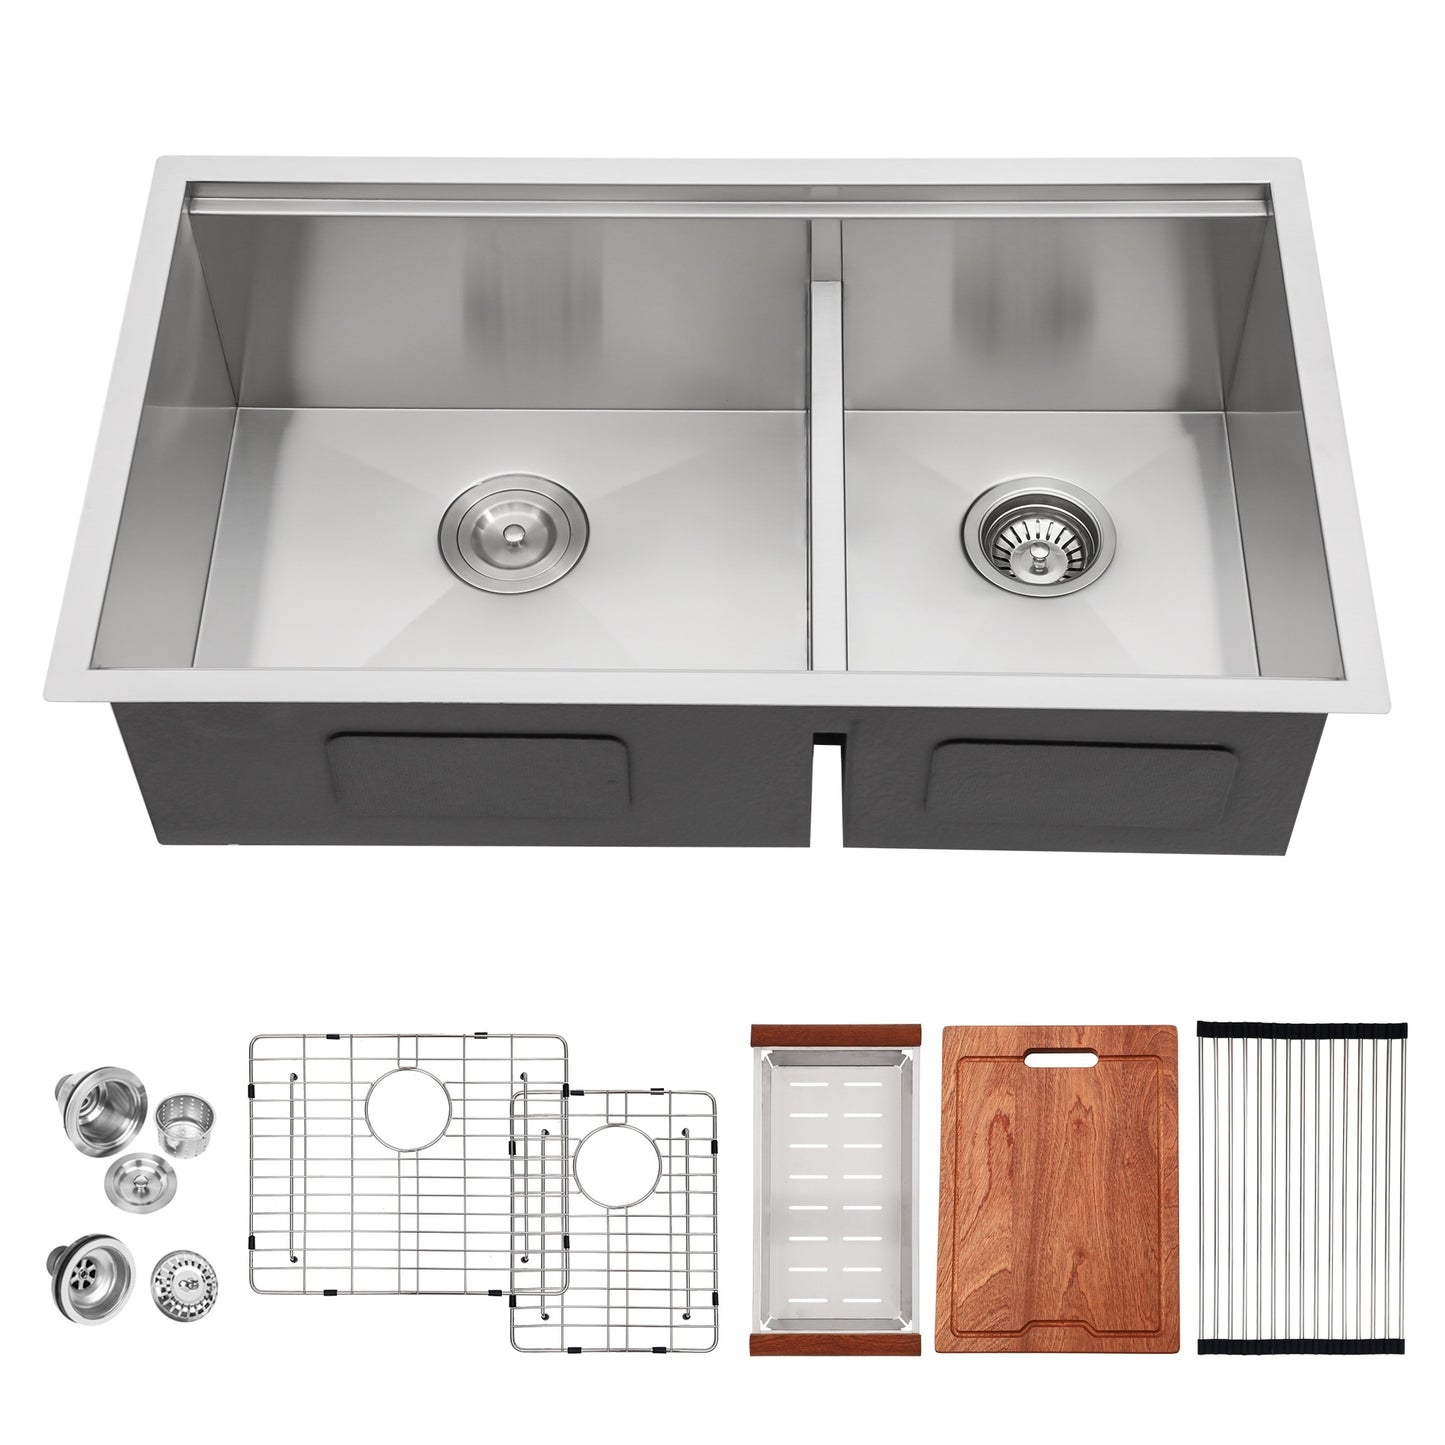 Lordear 33 Inch Undermount Workstation Sink Double Bowl 16 Gauge Stainless Steel Low Divide Kitchen Sink